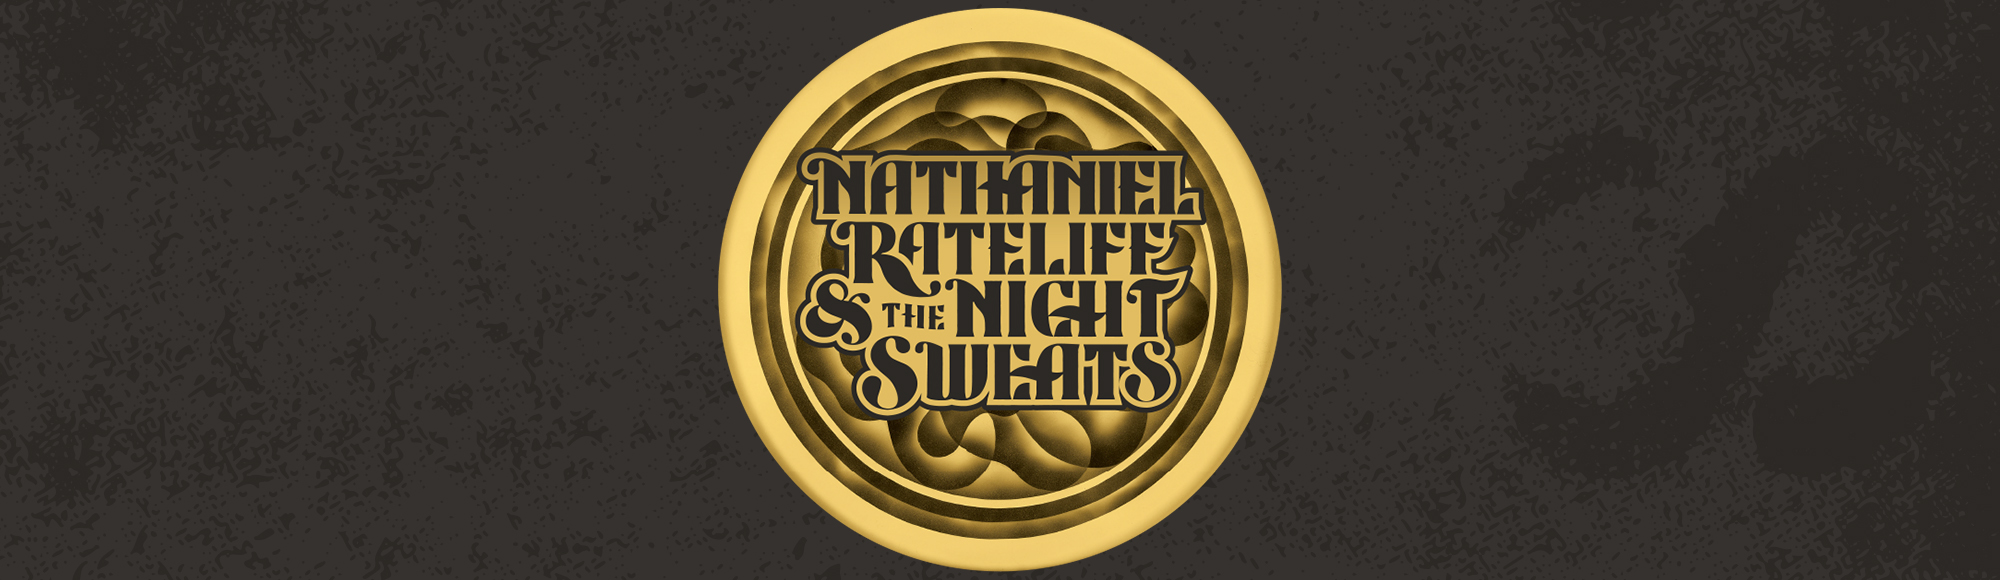 Nathaniel Rateliff & The Night Sweats show